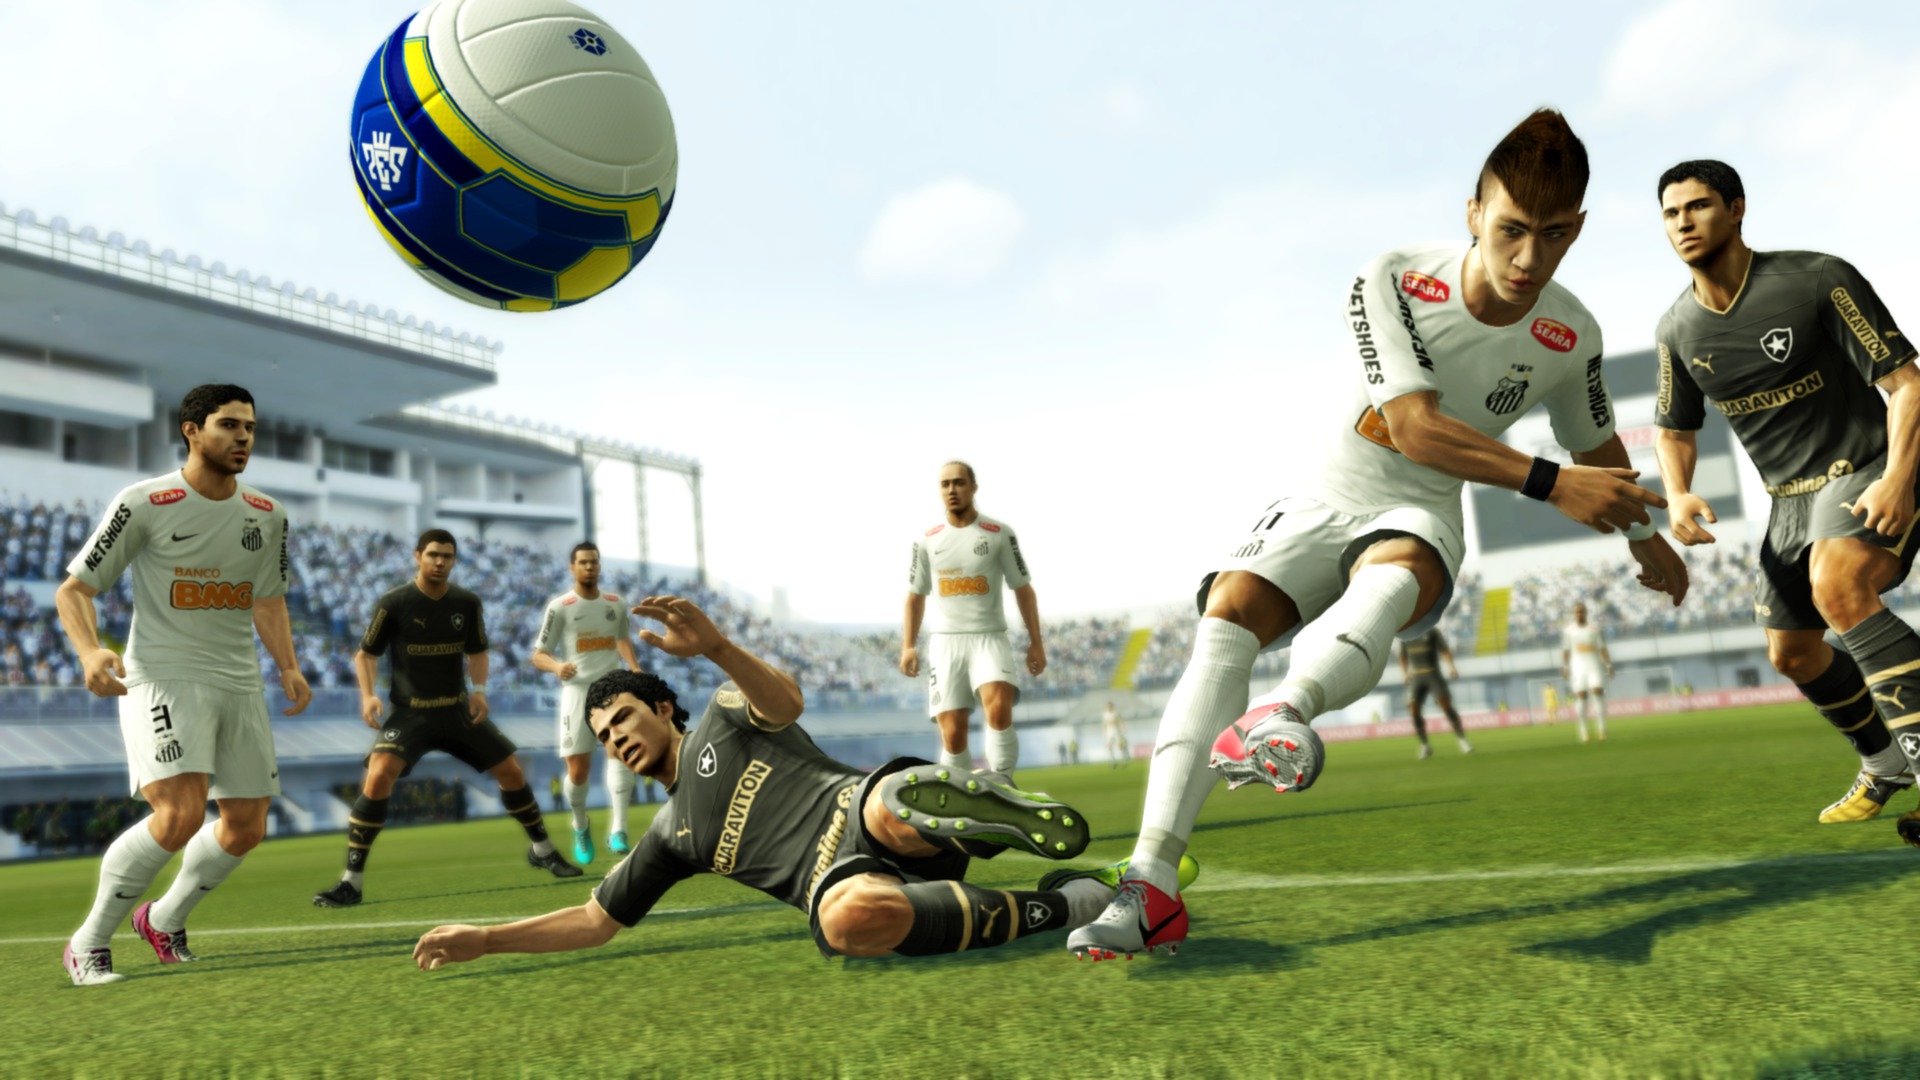 Pro evolution soccer 2013 download full pc game